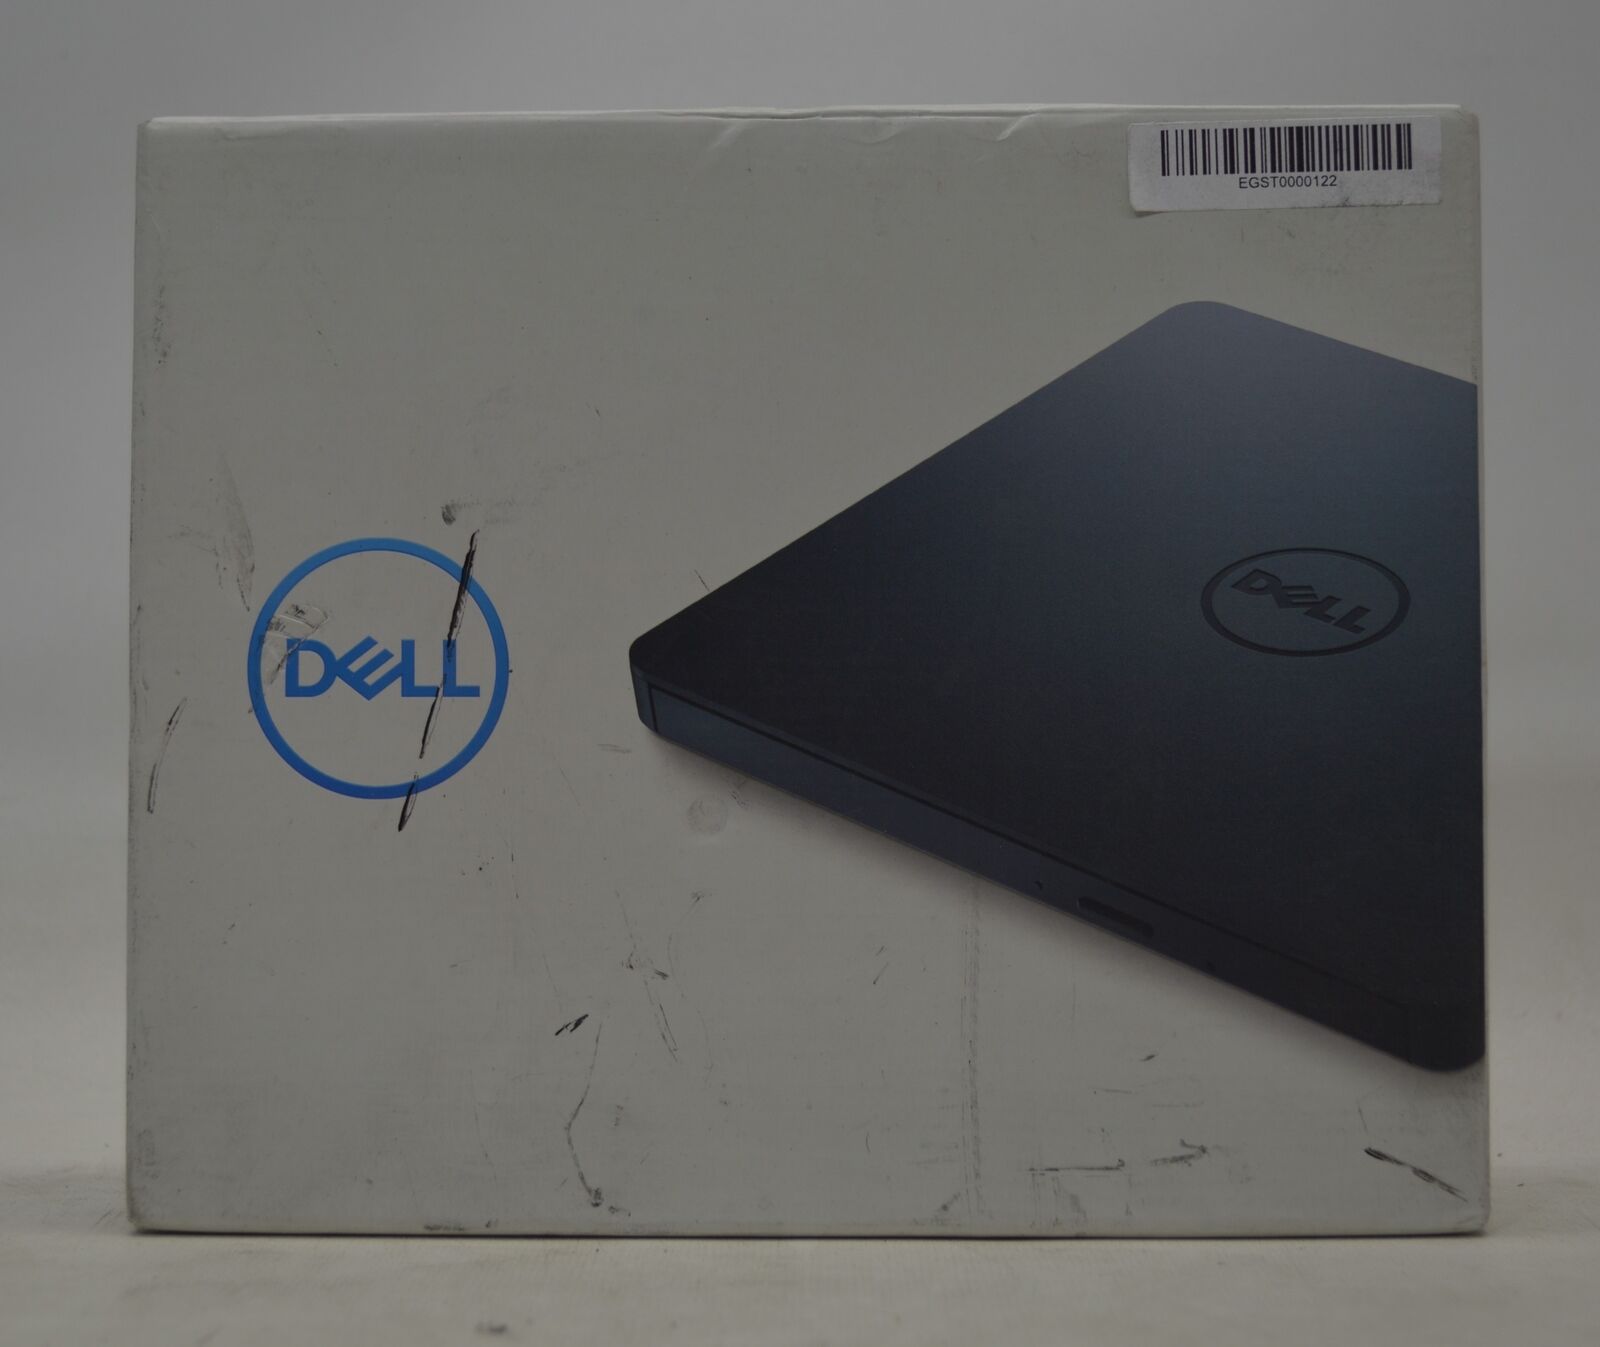 Dell Genuine DW316 External USB Slim DVD R/W Optical Drive GP61NB60 8J15V